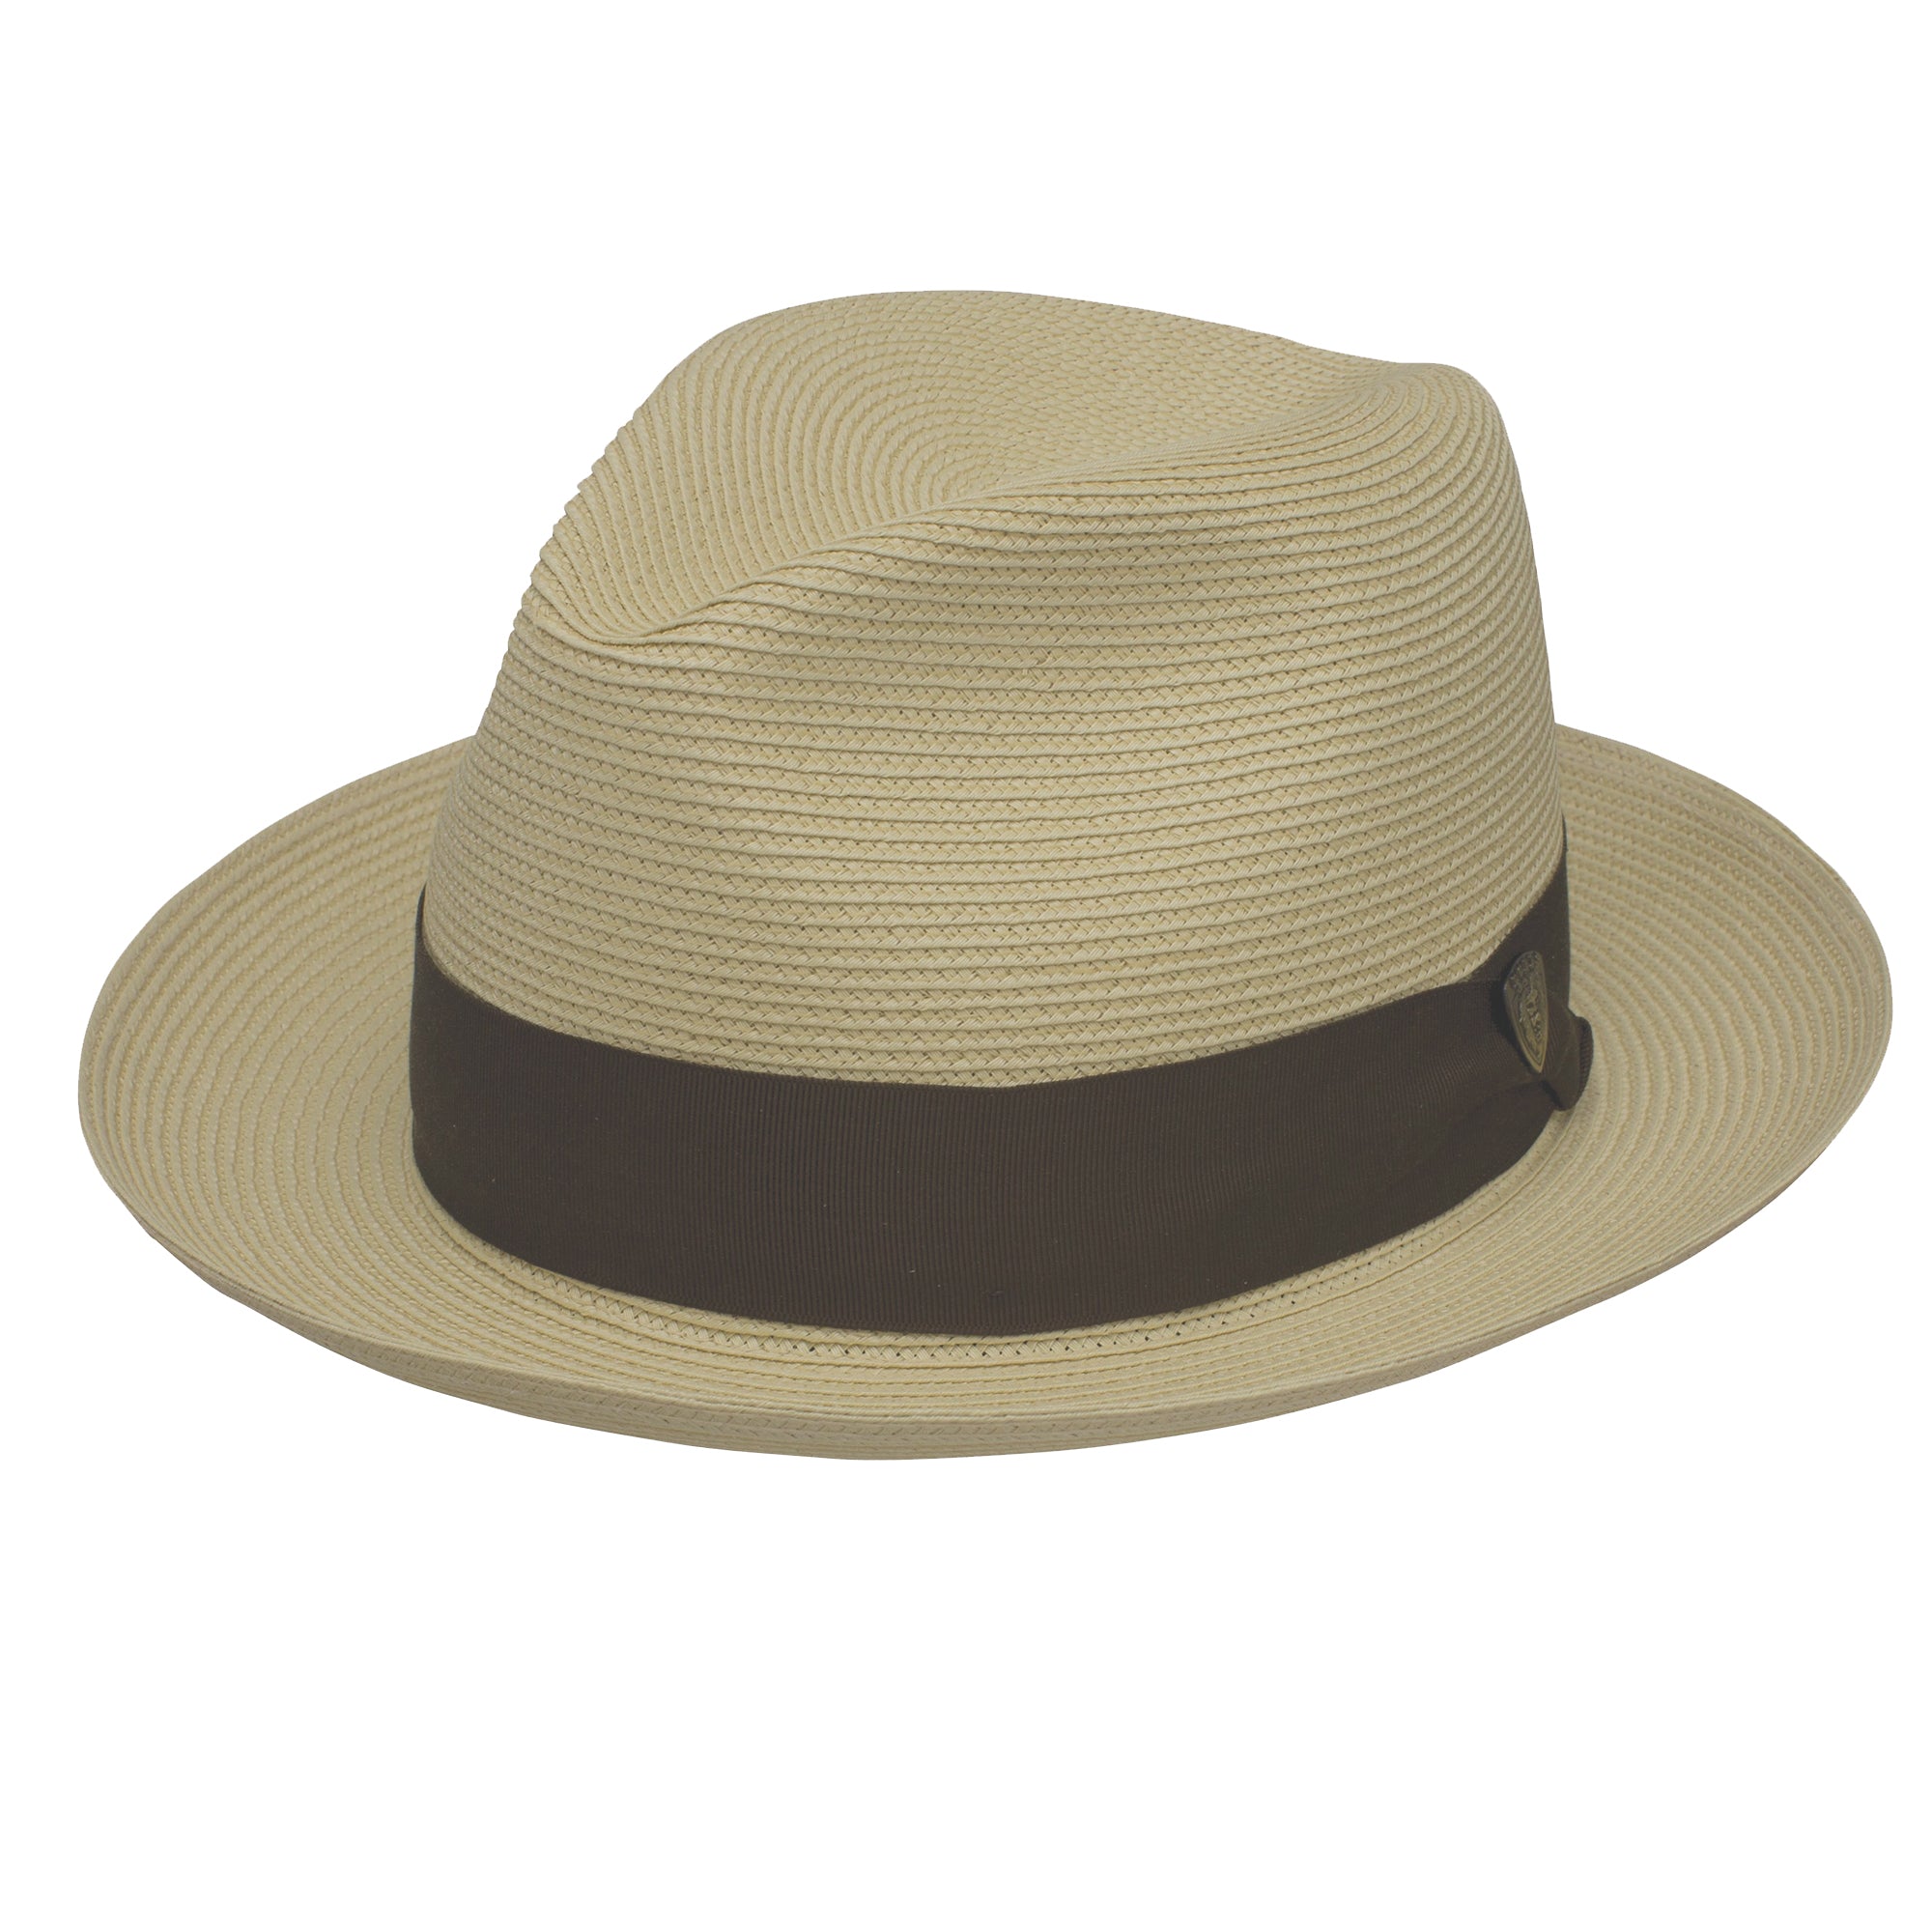 Dobbs Rosebud Straw Fedora Hat in Sand